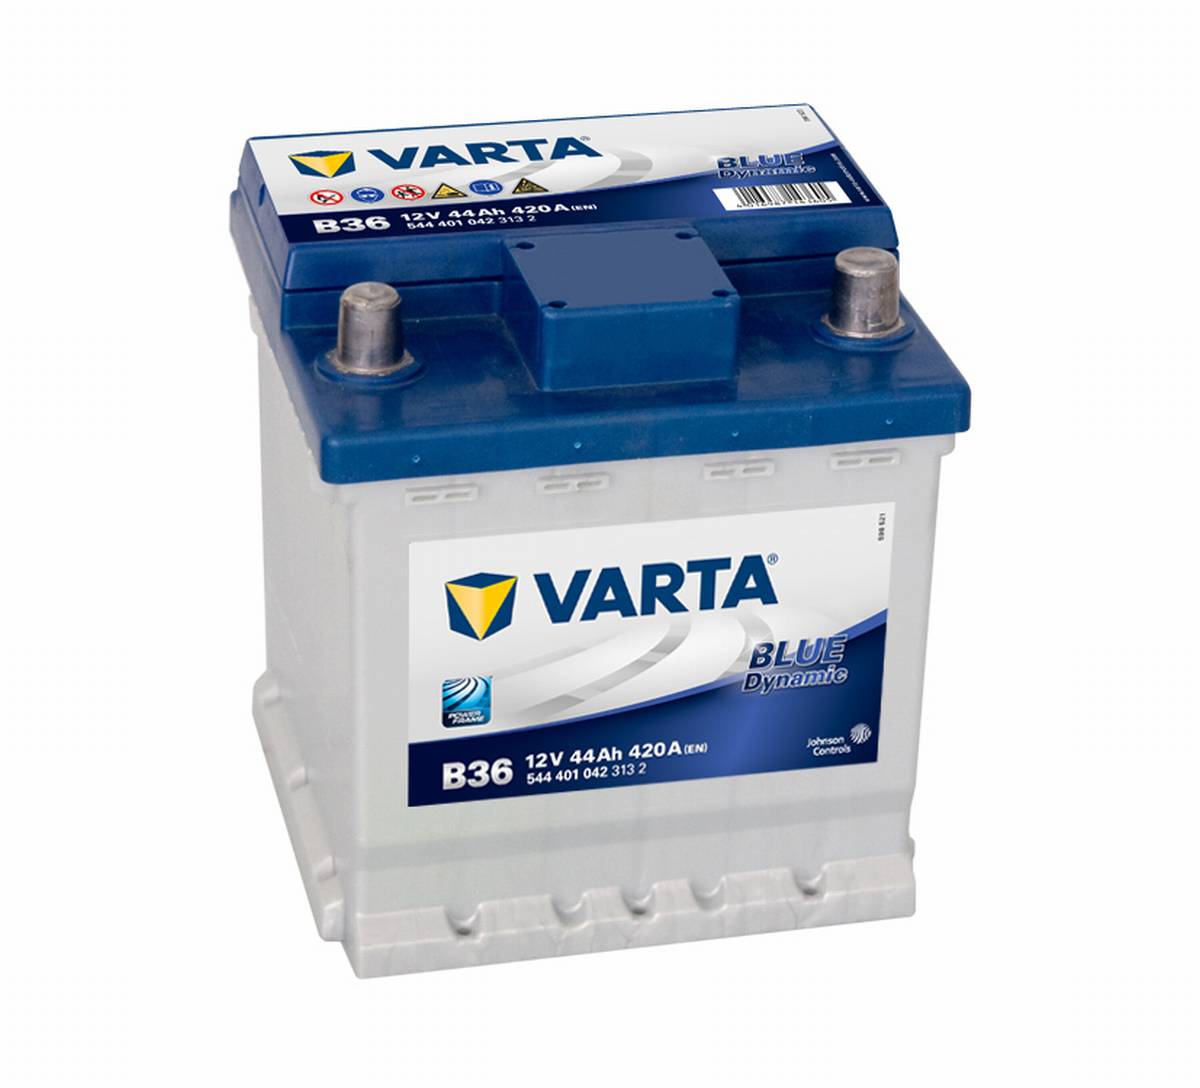 Varta BLUE Dynamic 544 401 042 3132 B36 12V 44Ah 420A/EN car battery, Boots & Marine, Batteries by application